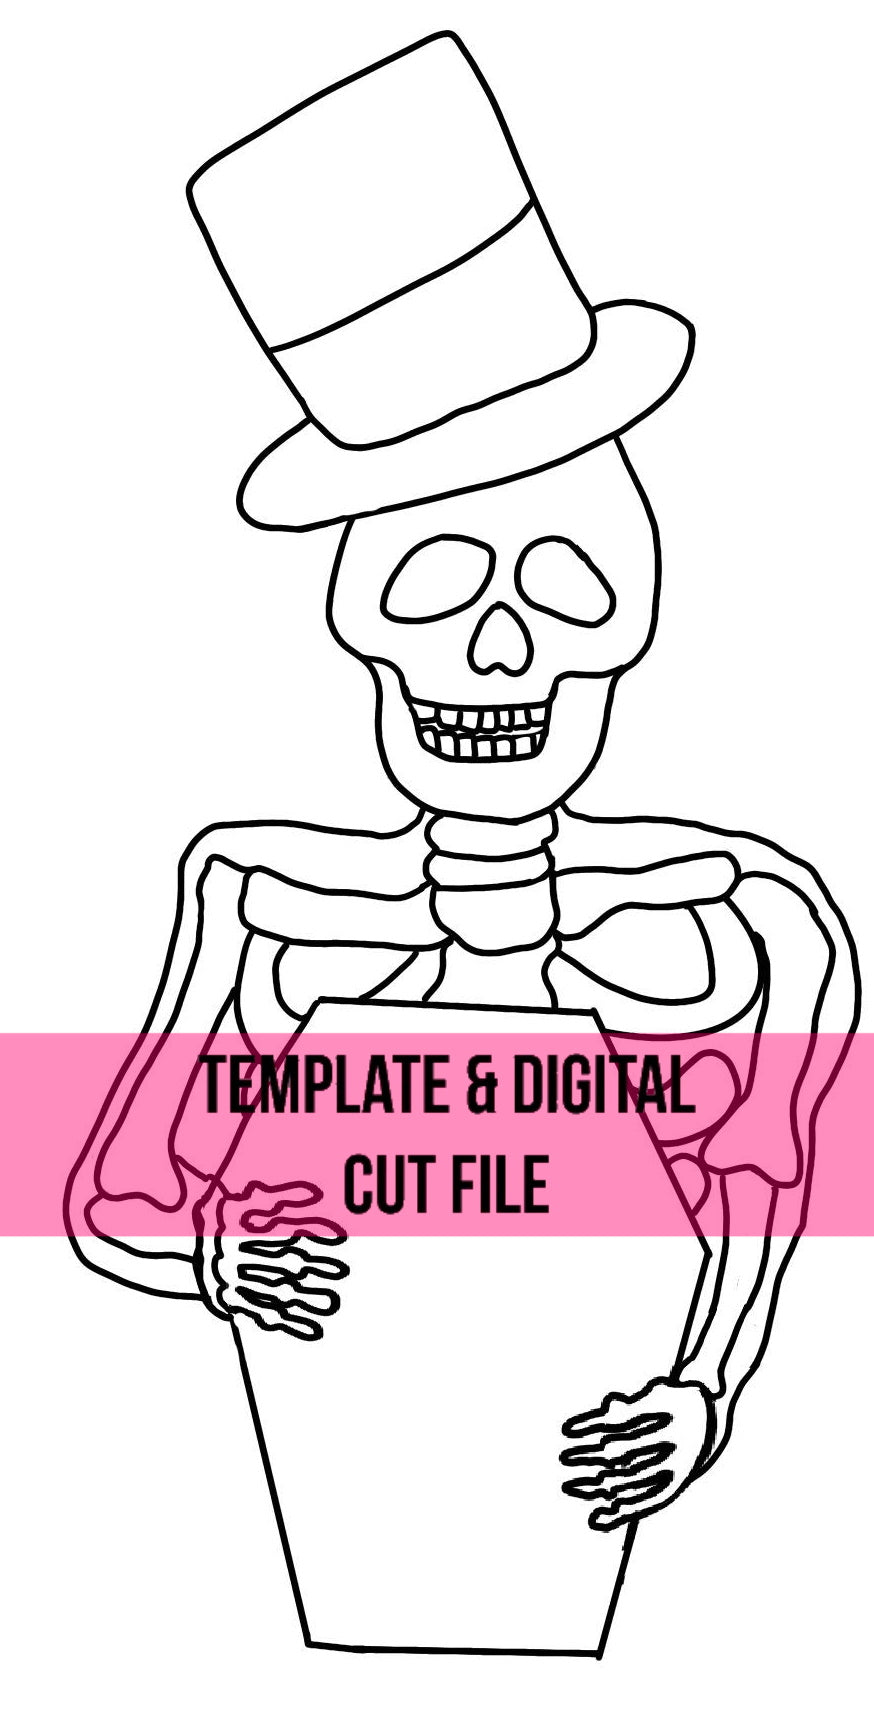 Skeleton Template & Digital Cut File